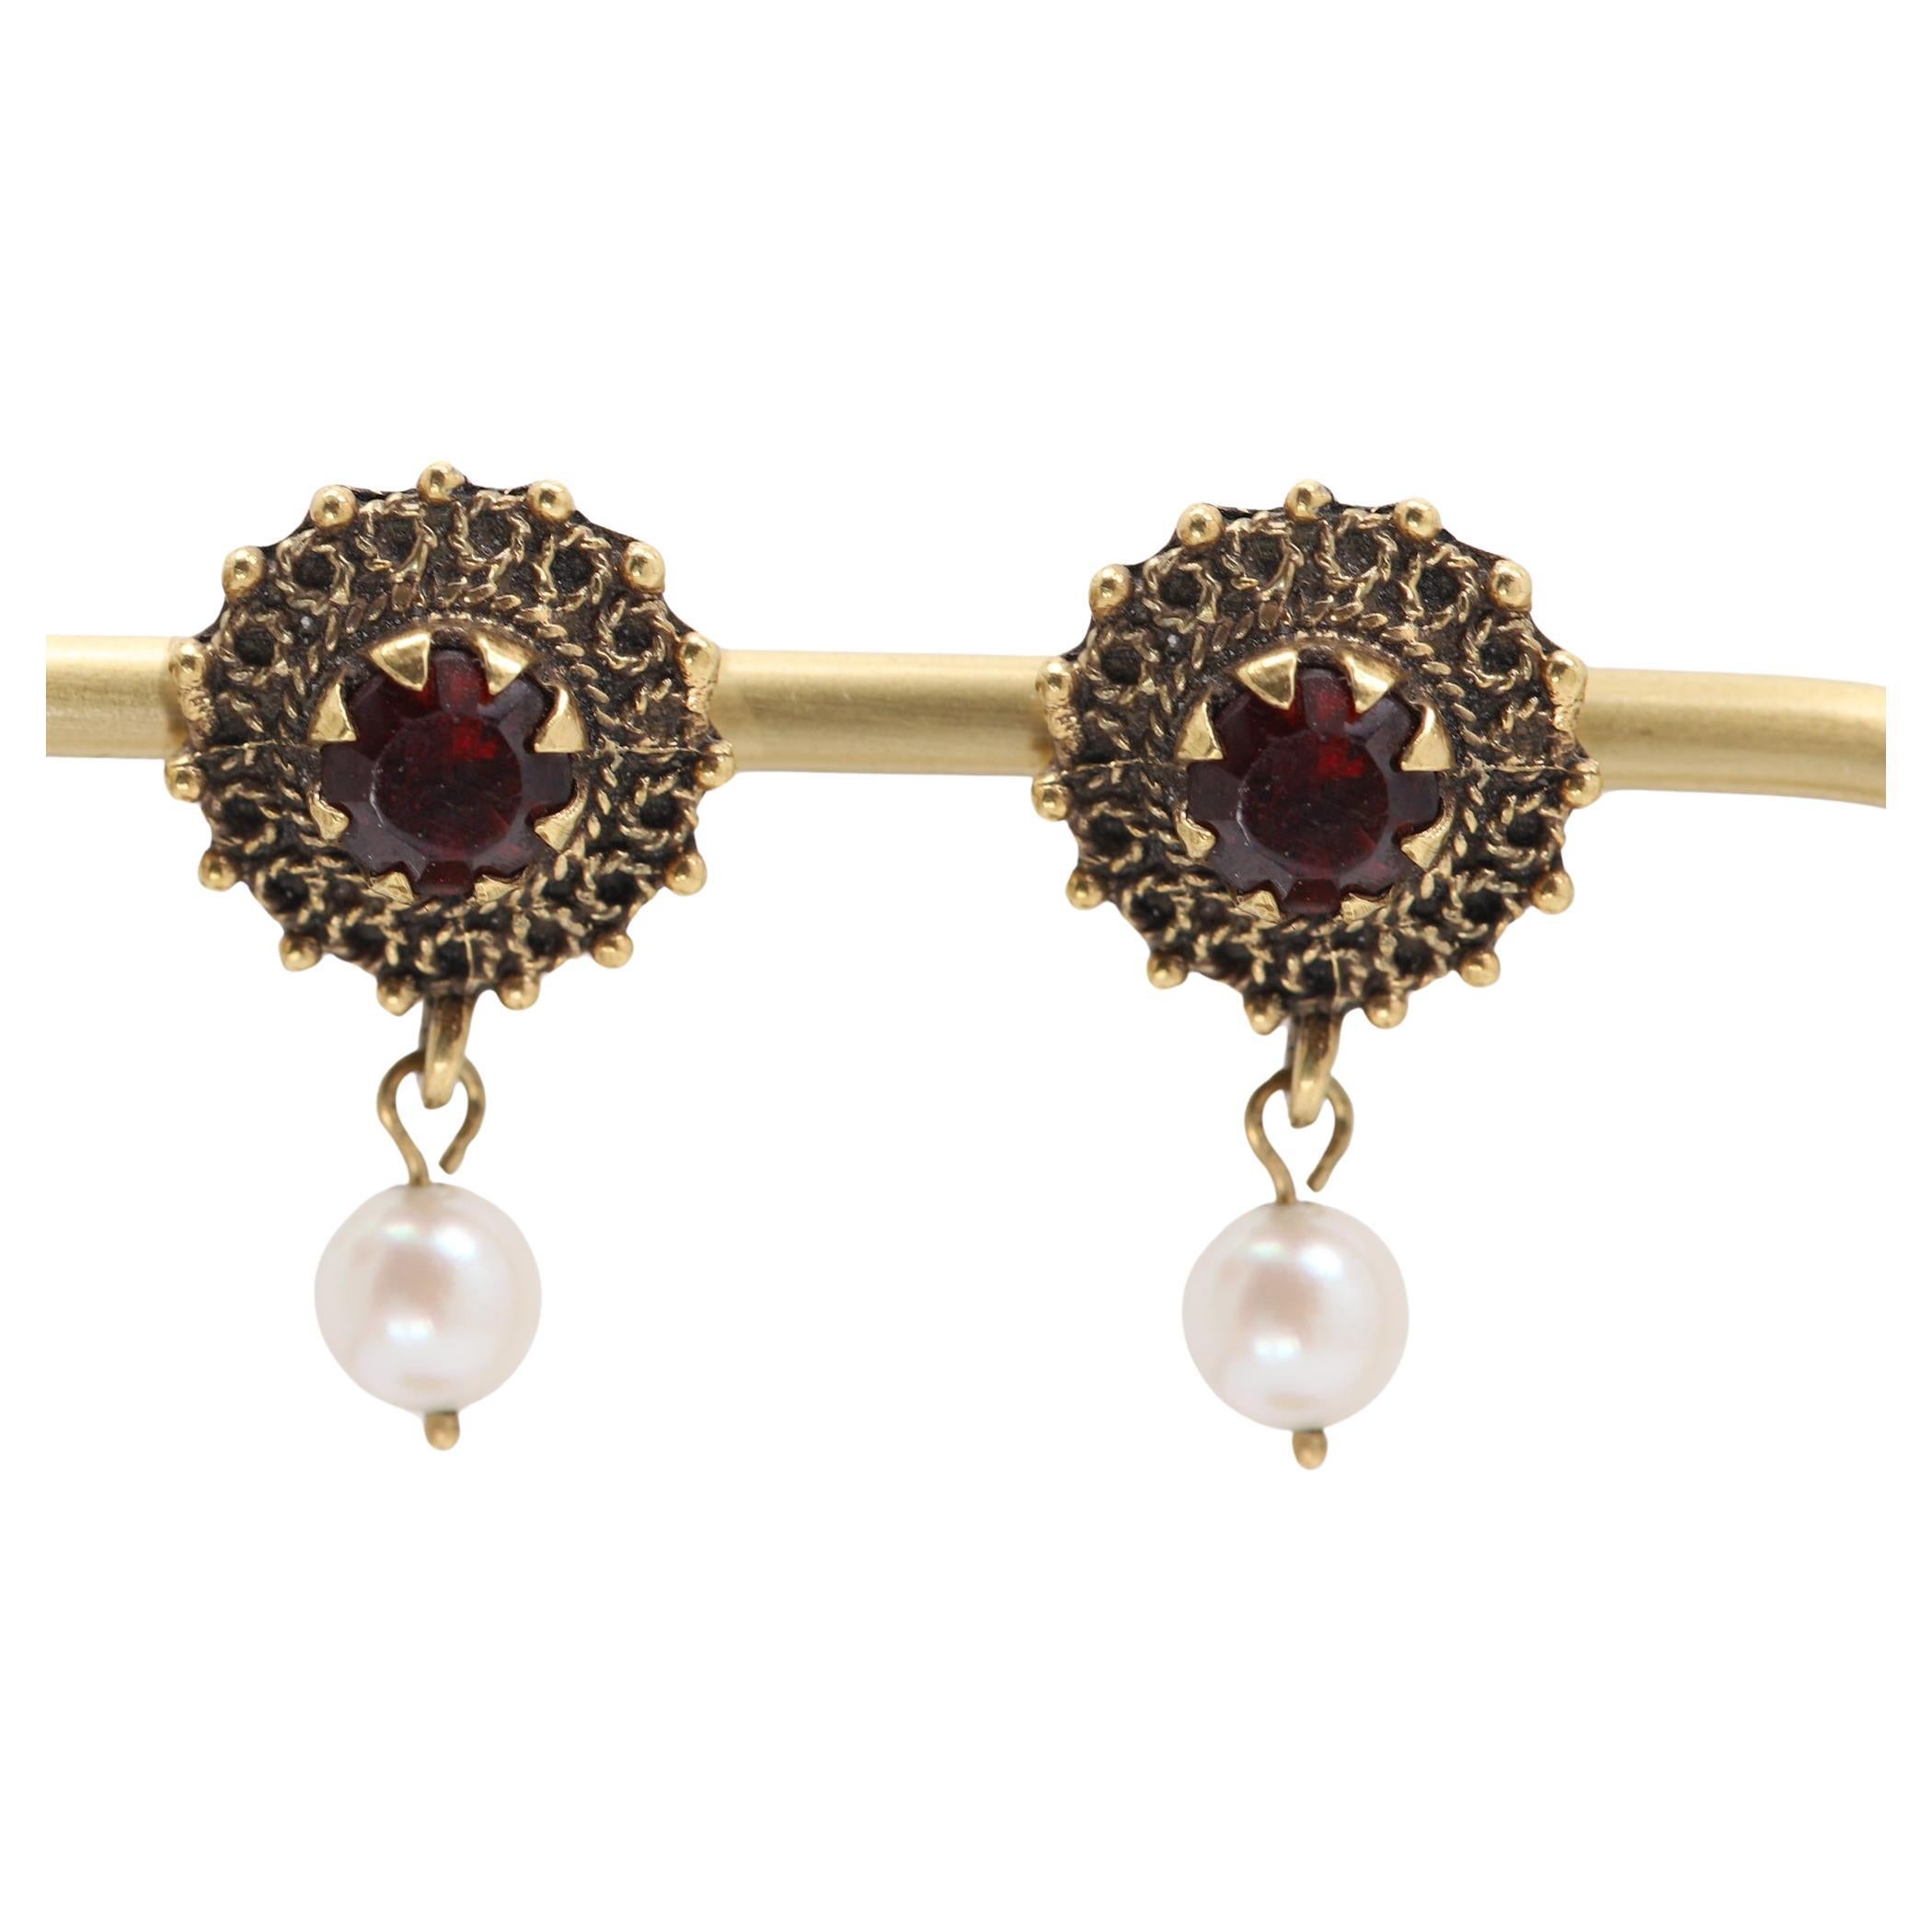 Circa 1940 Garnet Earrings 14 Karat Yellow Gold Pearl and Red Garnet Gemstone